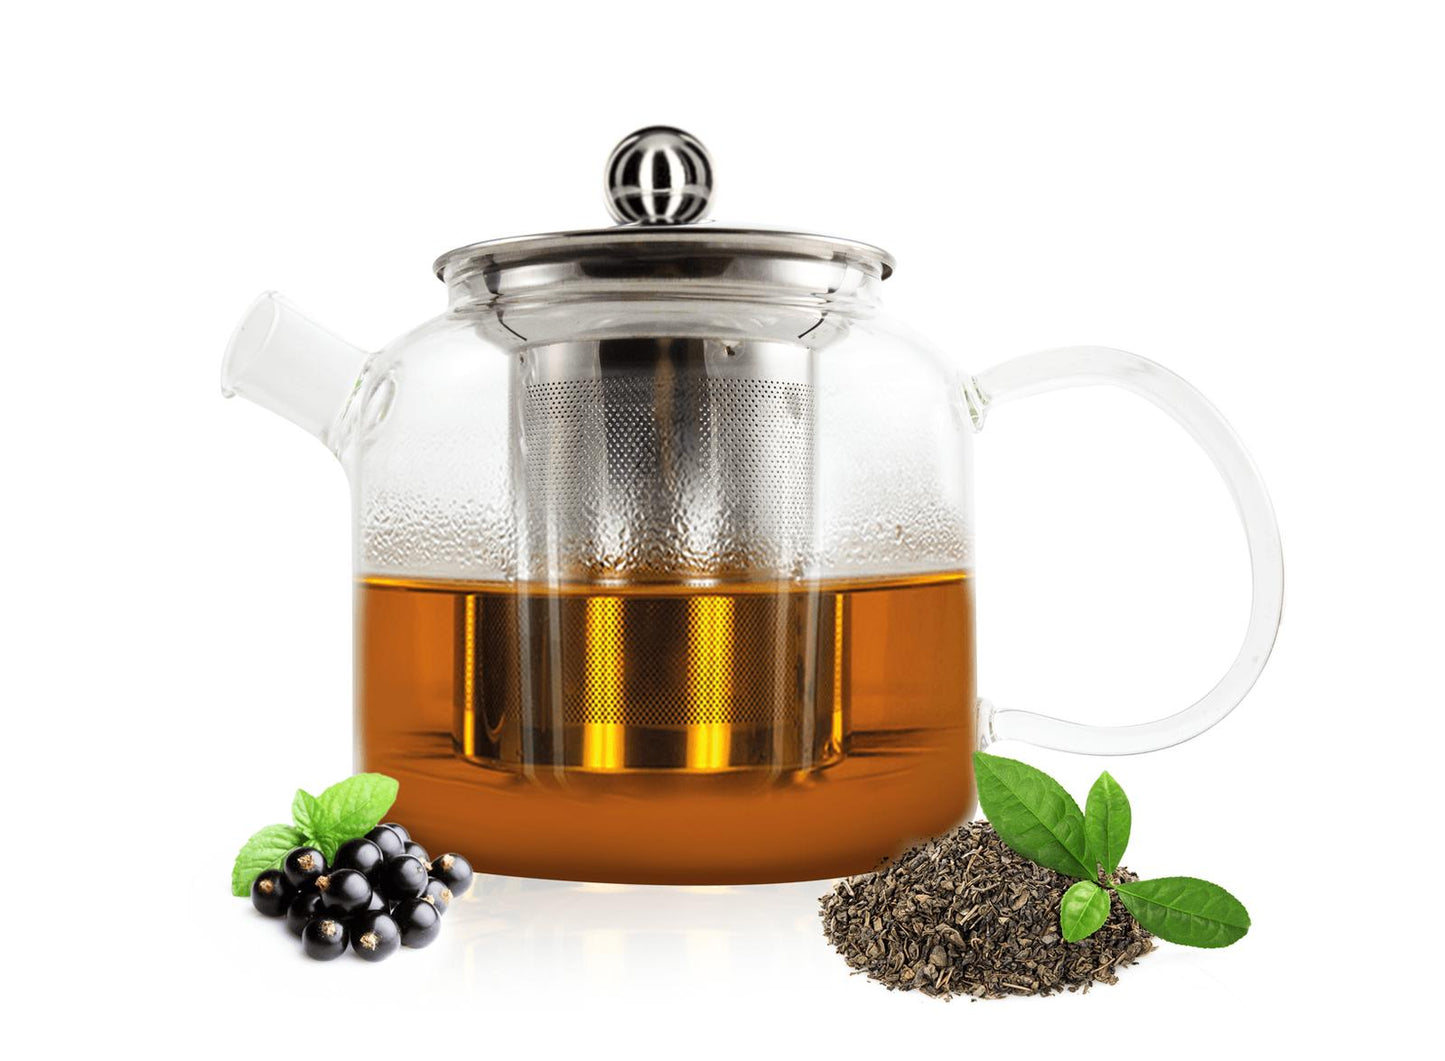 Teekanne mit Edelstahlfilter Teebereiter Glaskanne Kanne Teesieb Tee Teefilter